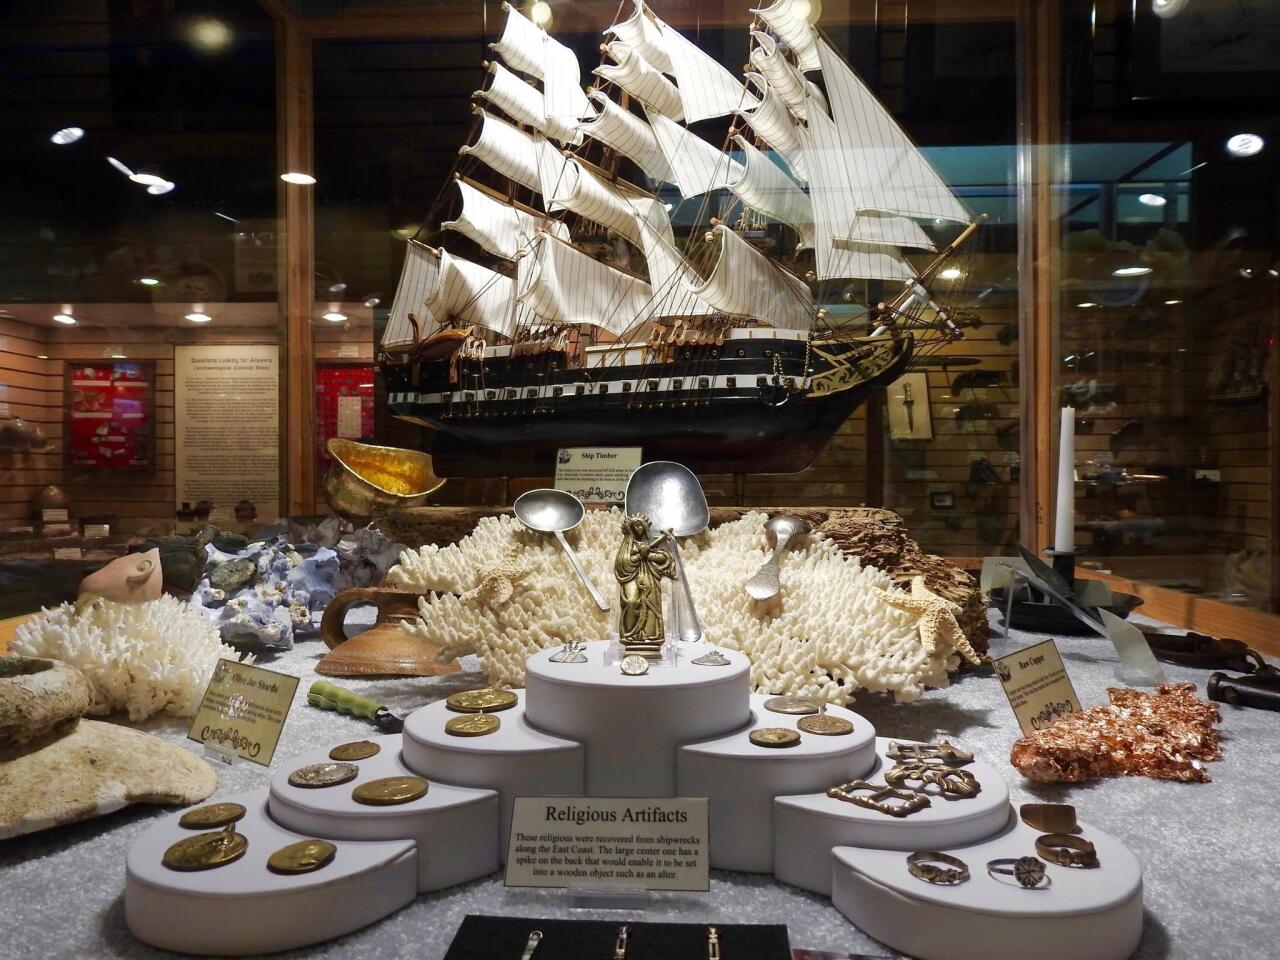 DiscoverSea Shipwreck Museum